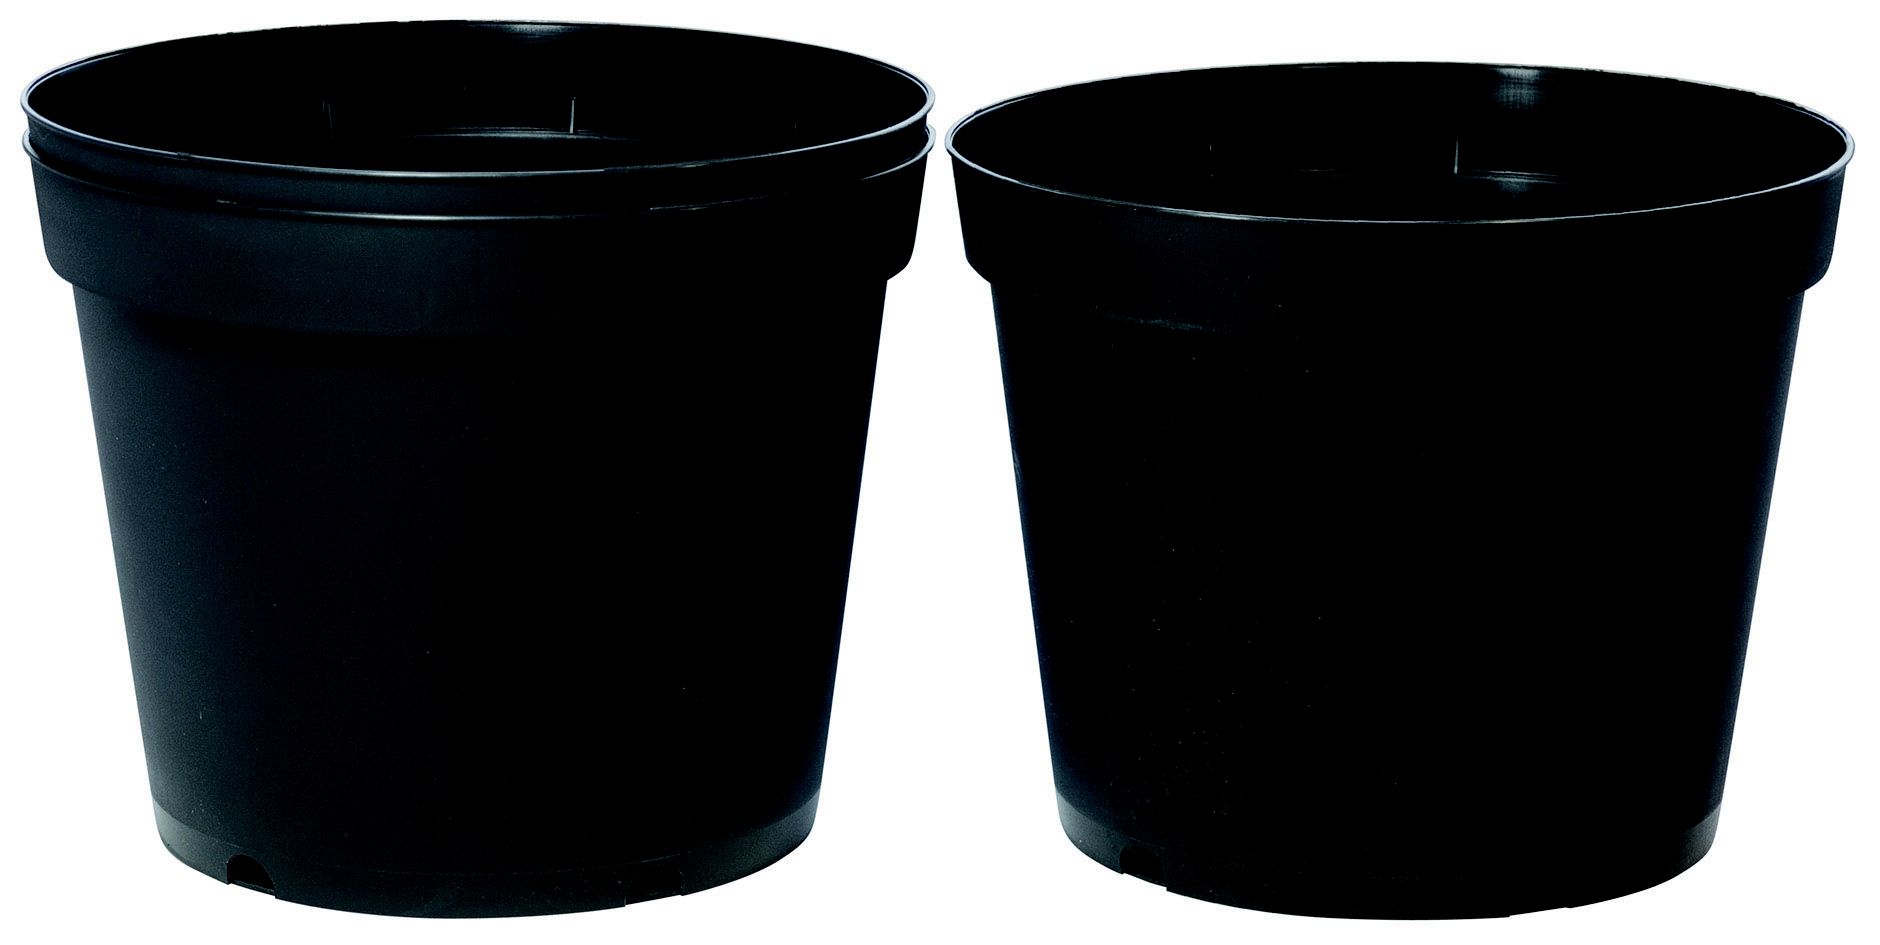 Black Plastic Circular Grow pot (Dia)23cm, Pack of 3